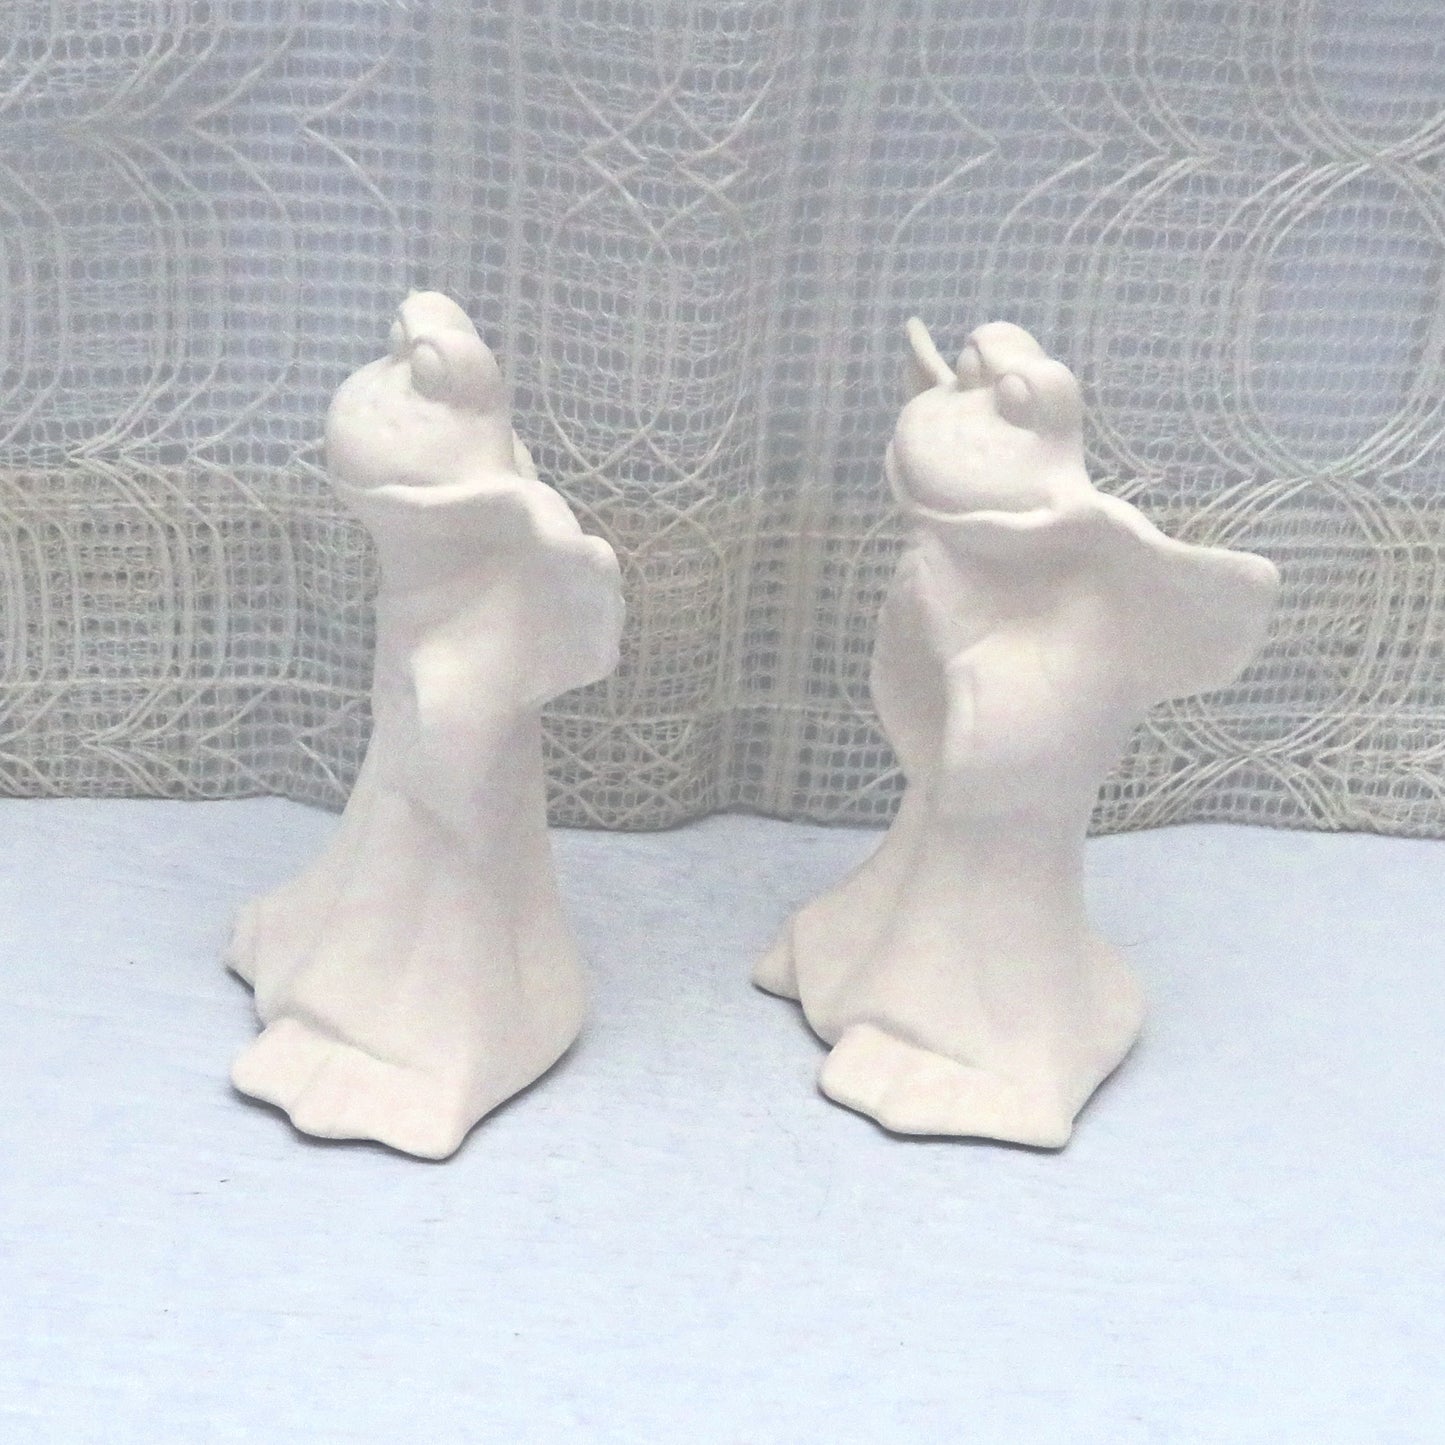 Unpainted Ceramic Bisque Frog Angel Figurines, Ready to Paint Ceramic Frog Figurines